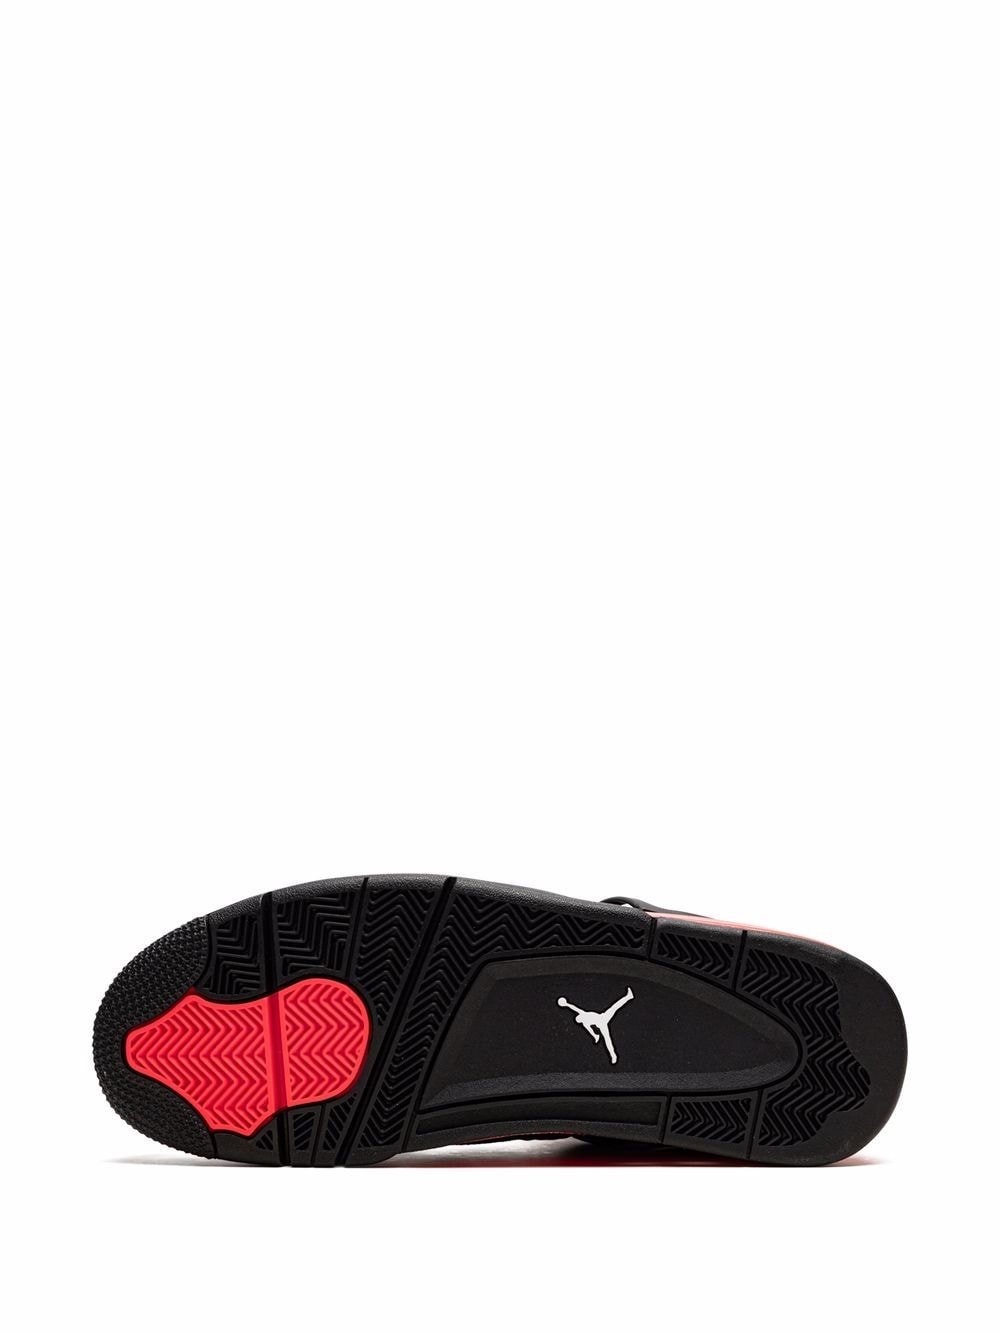 Air Jordan Retro 4 THUNDER RED